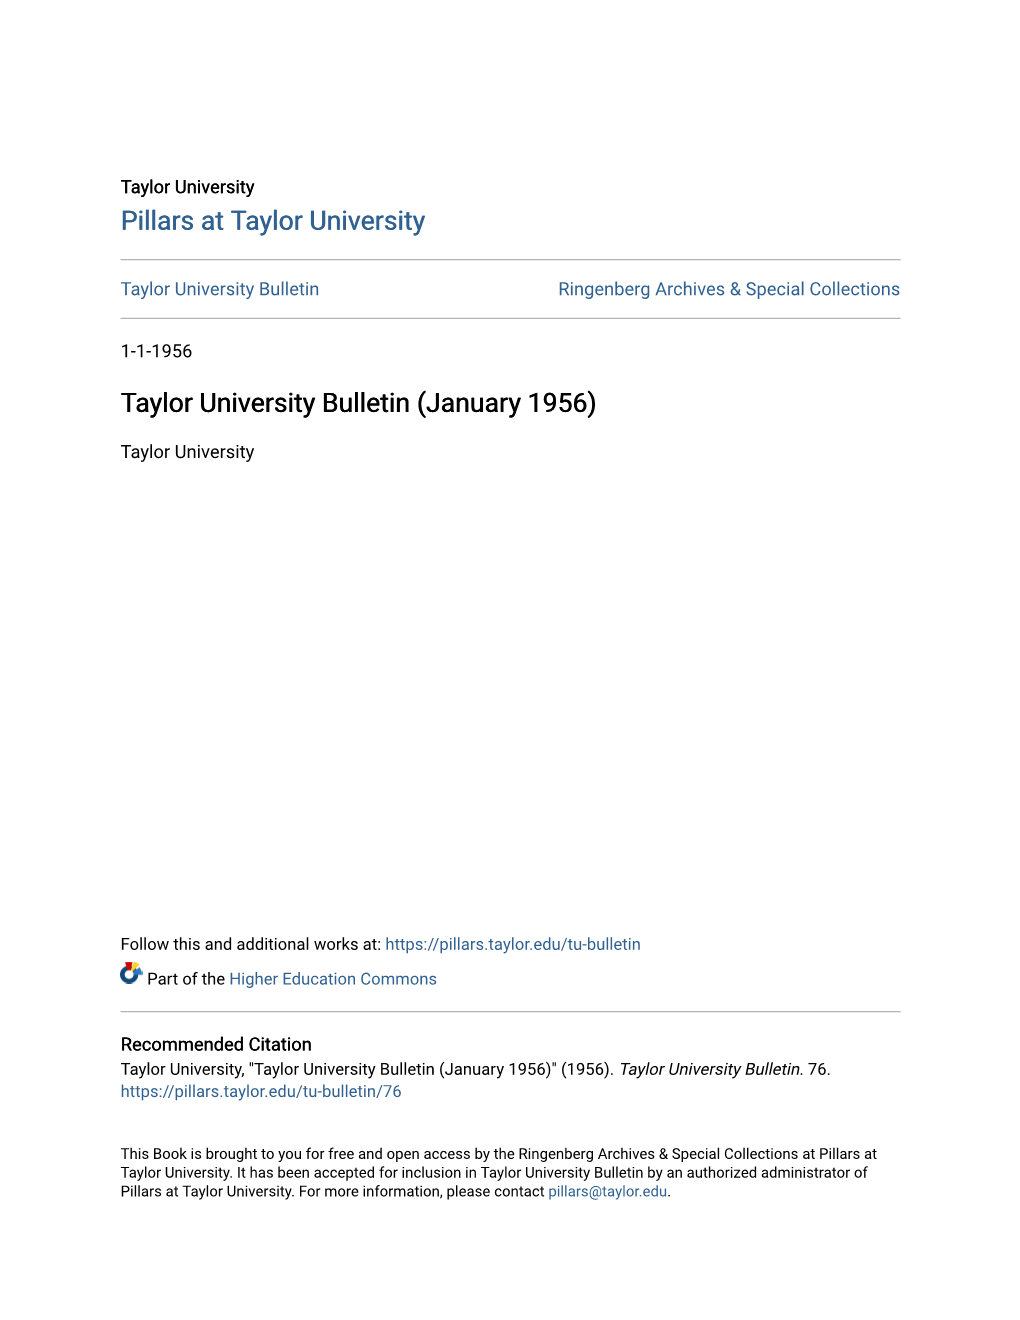 Taylor University Bulletin (January 1956)